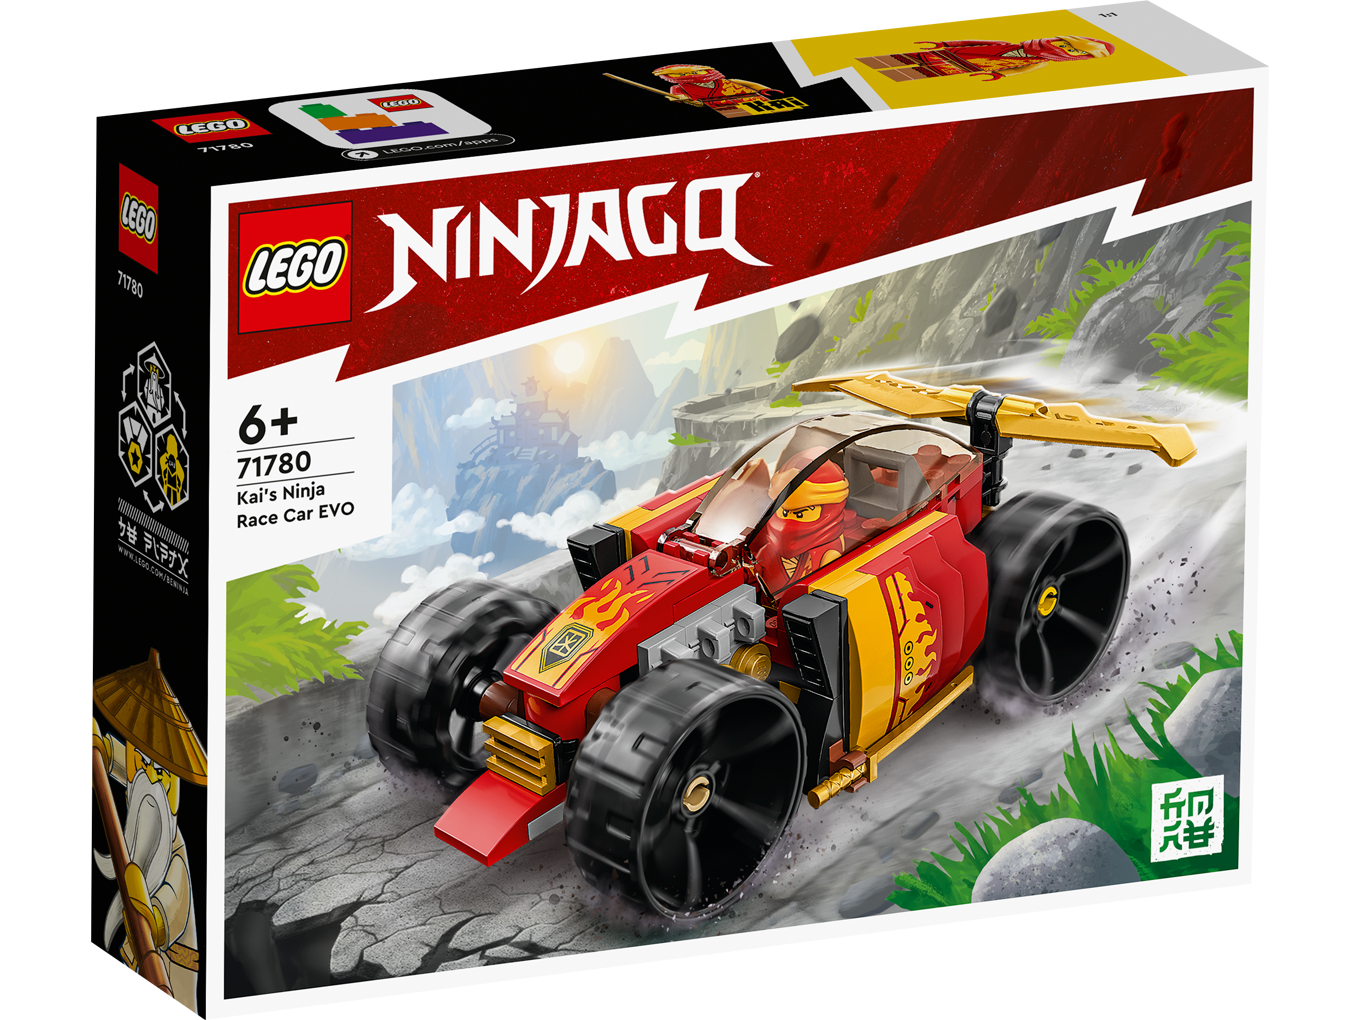 Schuldig boiler Van God LEGO Ninjago 71780 Kai's Ninja Racewagen EVO - Jan's Steen